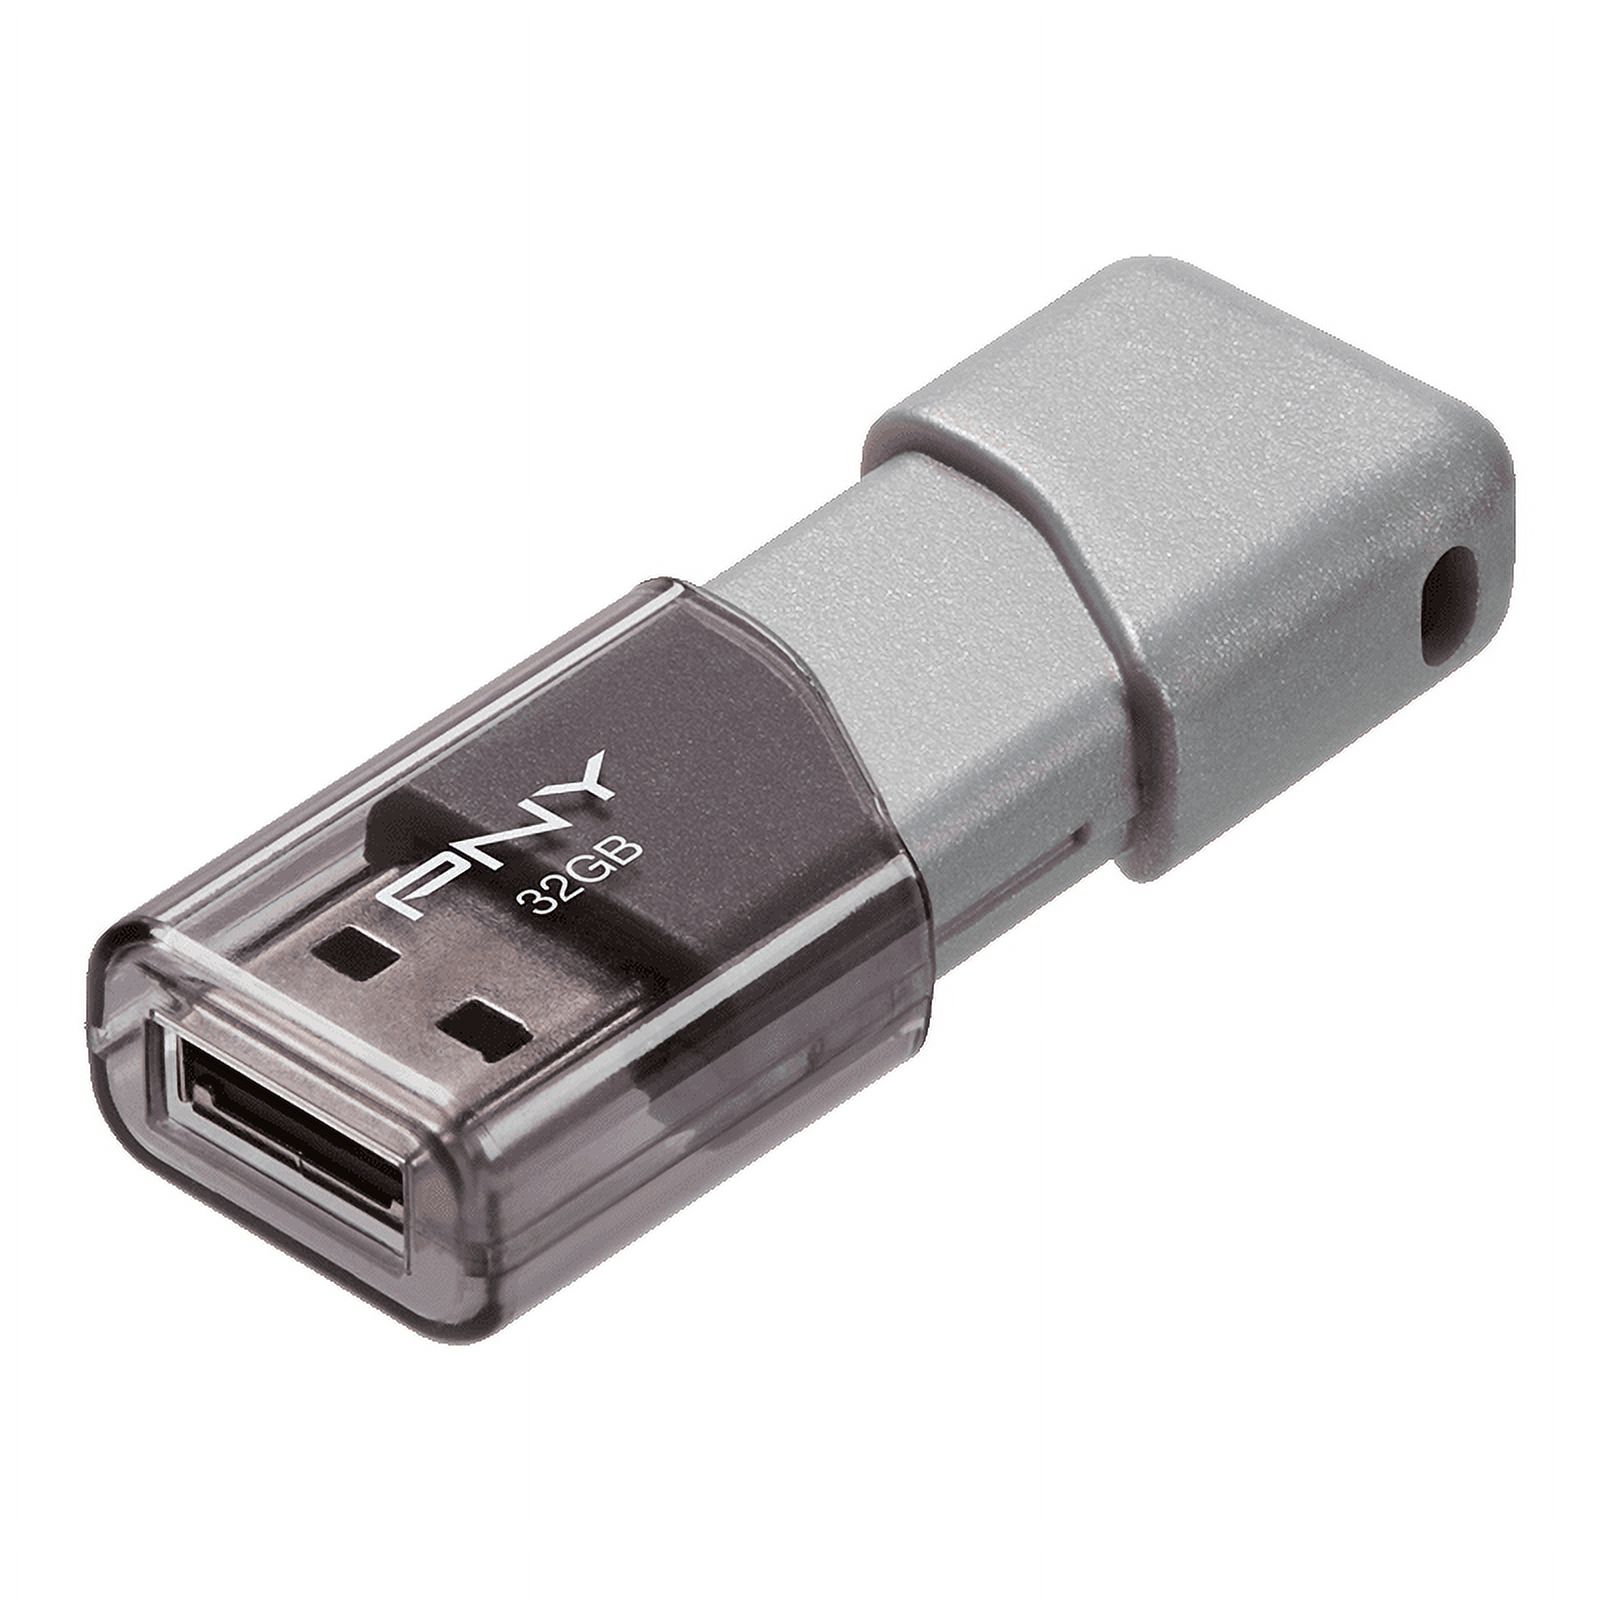 PNY Elite Turbo Attache 3 32GB Turbo USB 3.0 Flash Drive - image 4 of 6